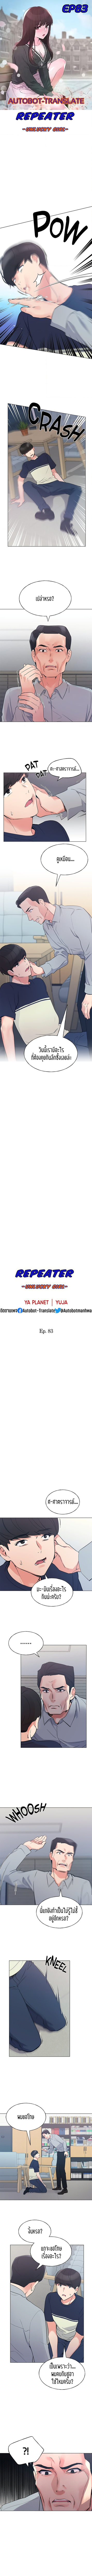 Repeater 83 1